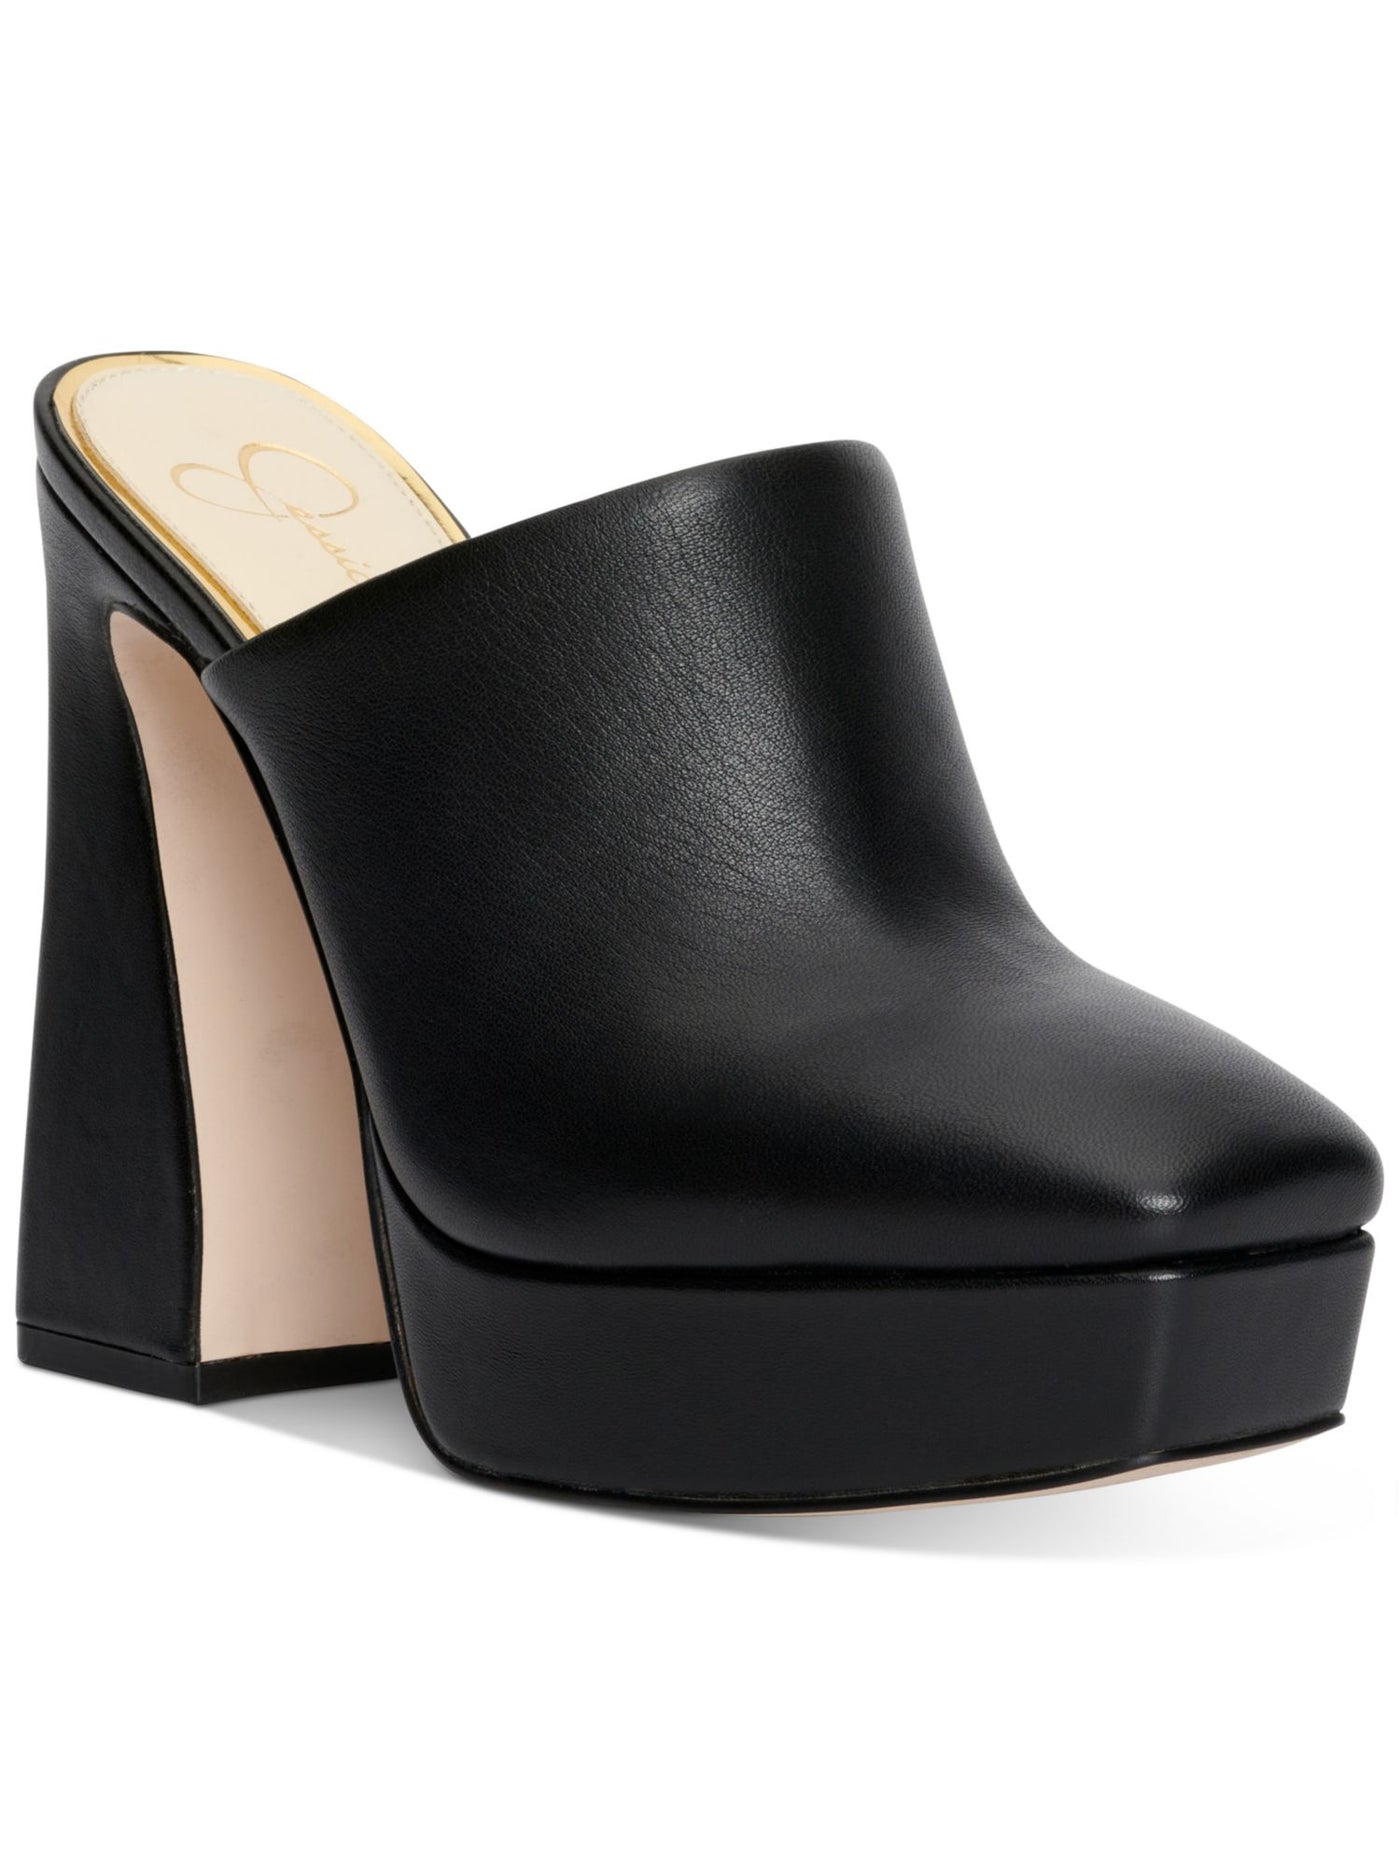 JESSICA SIMPSON Womens Black 1-1/2" Platform Denima Square Toe Slip On Leather Heeled Mules Shoes 9.5 M